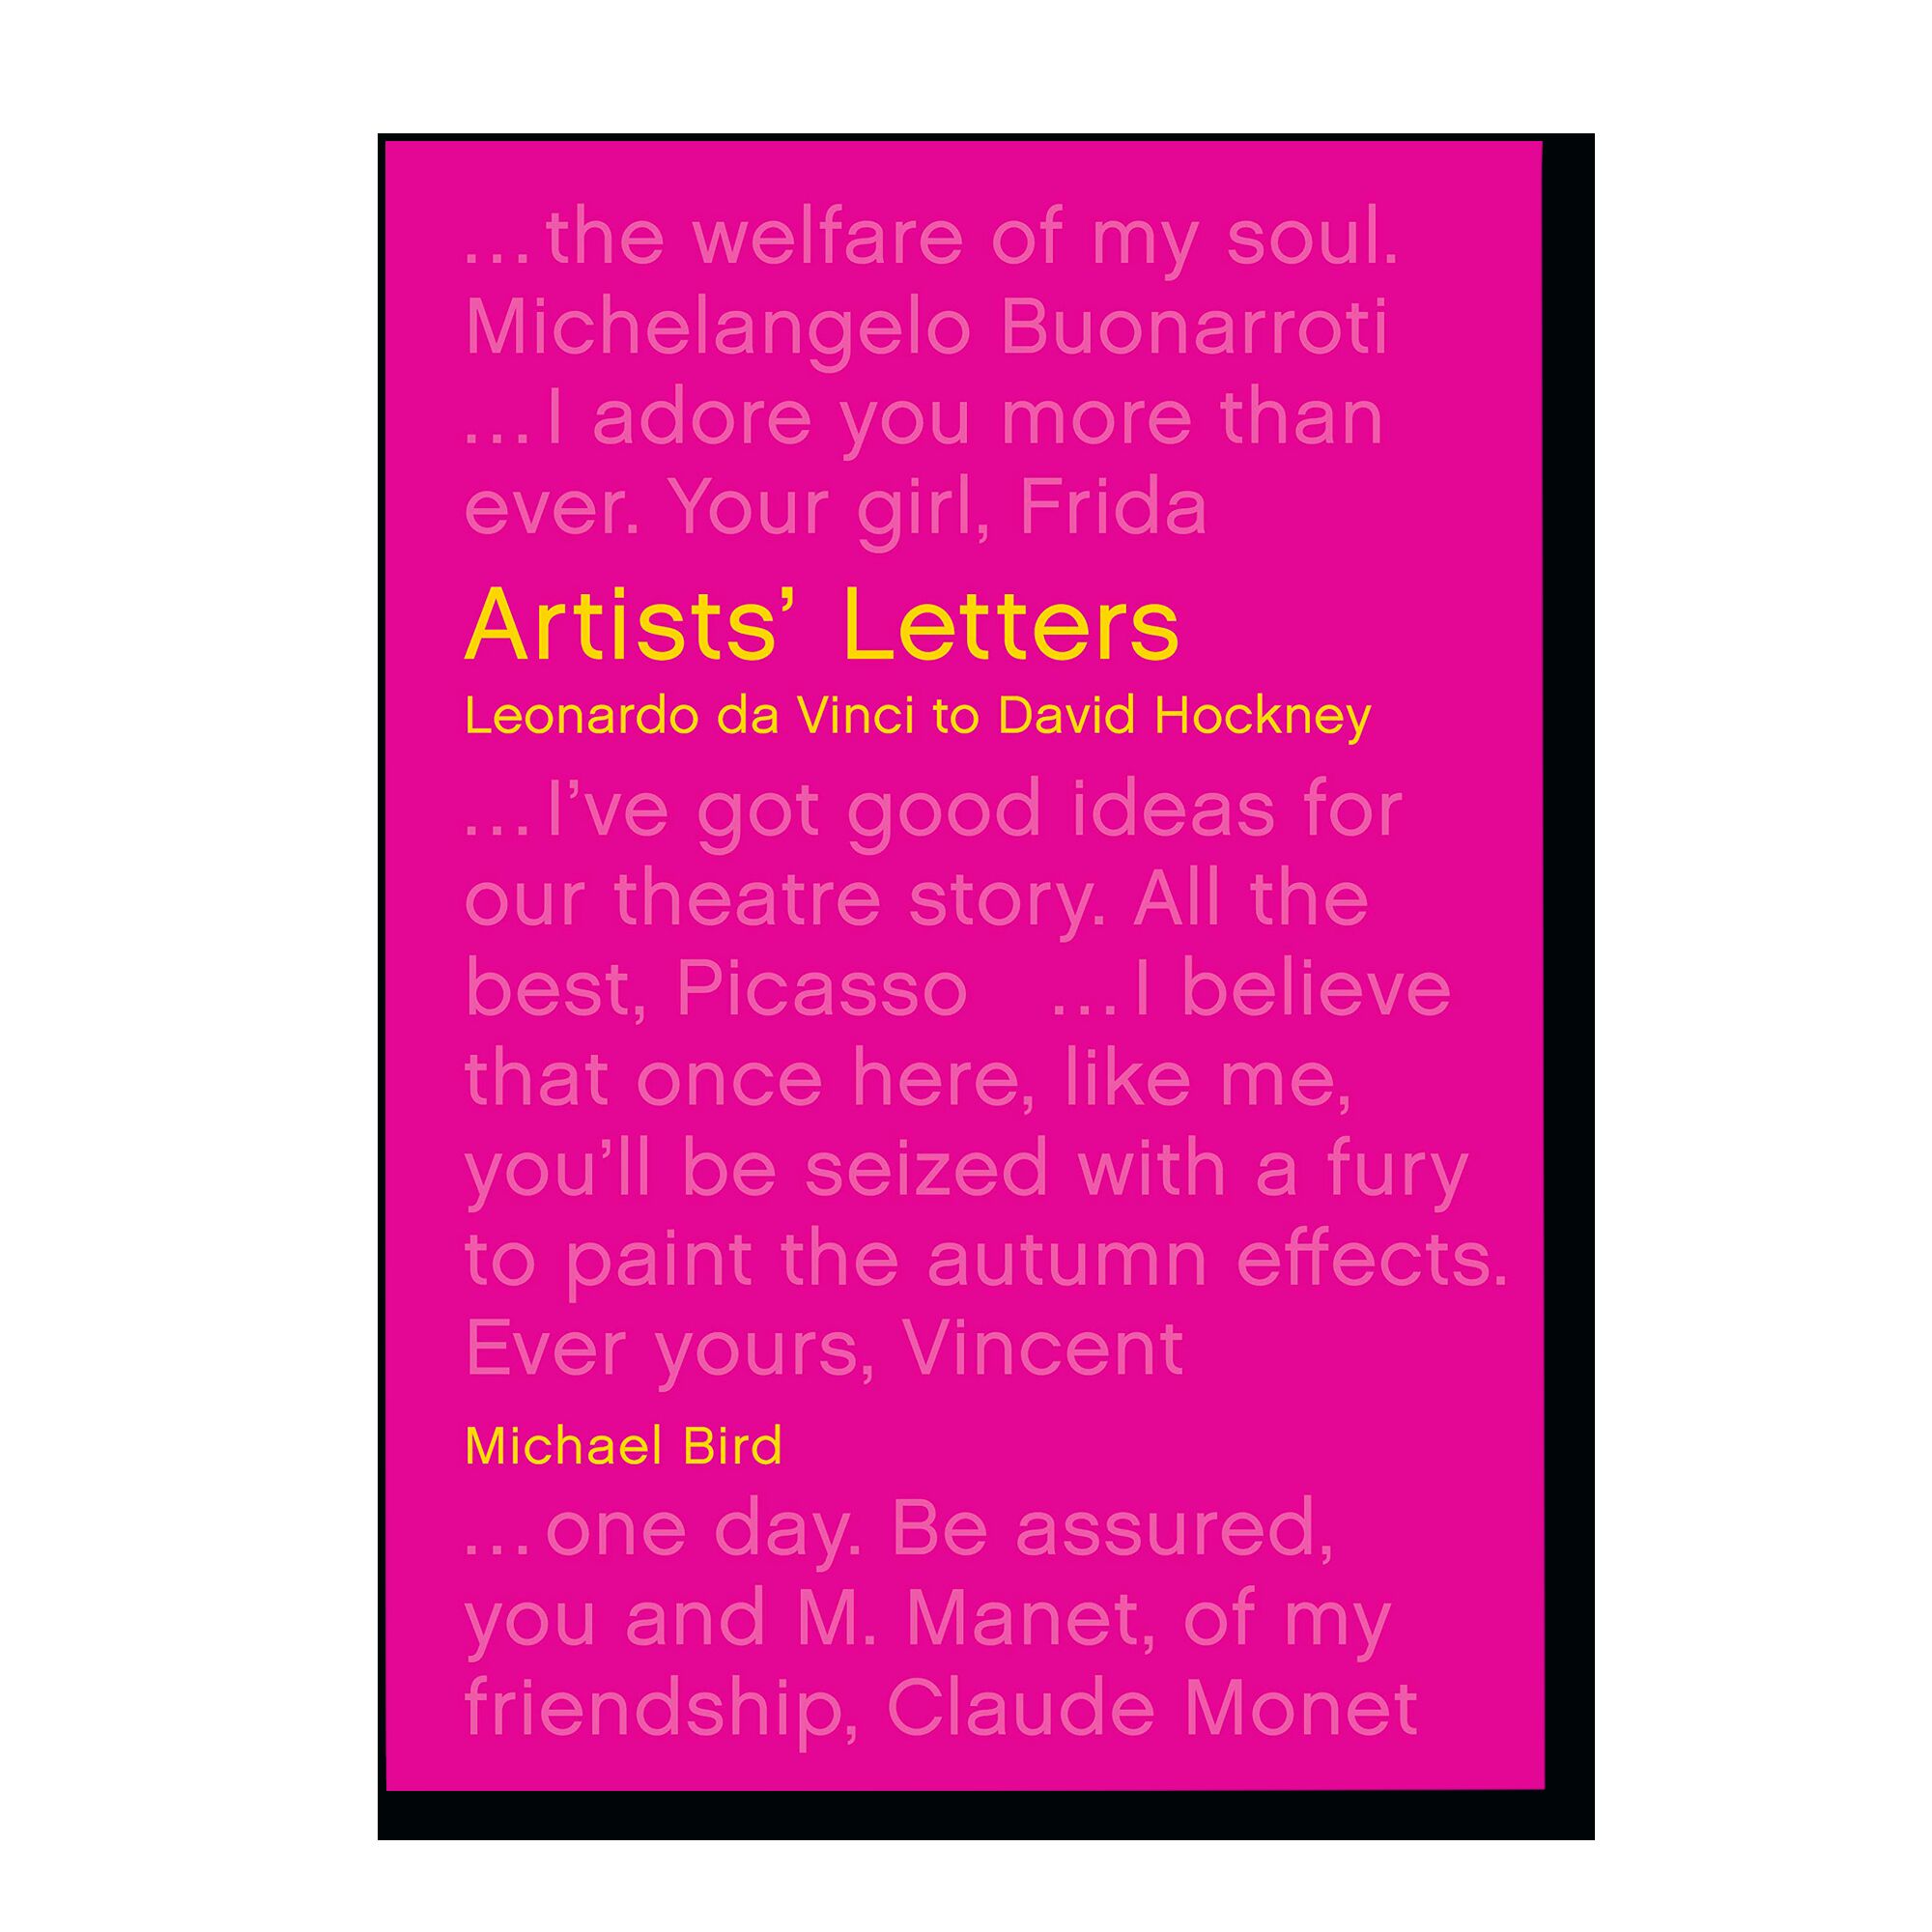 Artists' Letters: Leonardo da Vinci to David Hockney